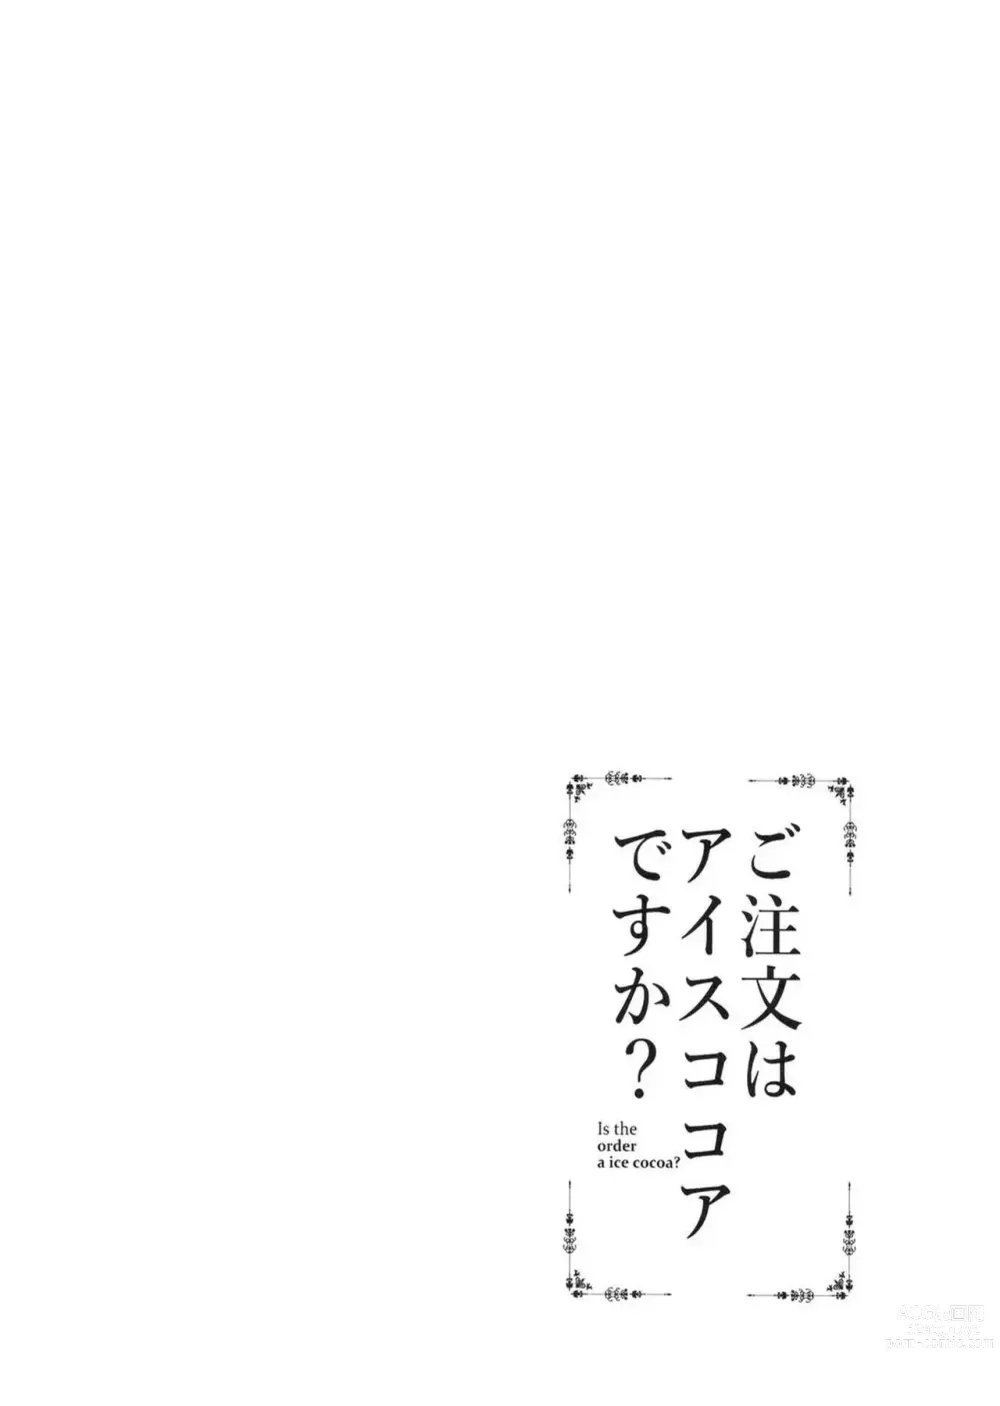 Page 3 of doujinshi Gochuumon wa Ice Kokoa desu ka? - is the order a ice cocoa?